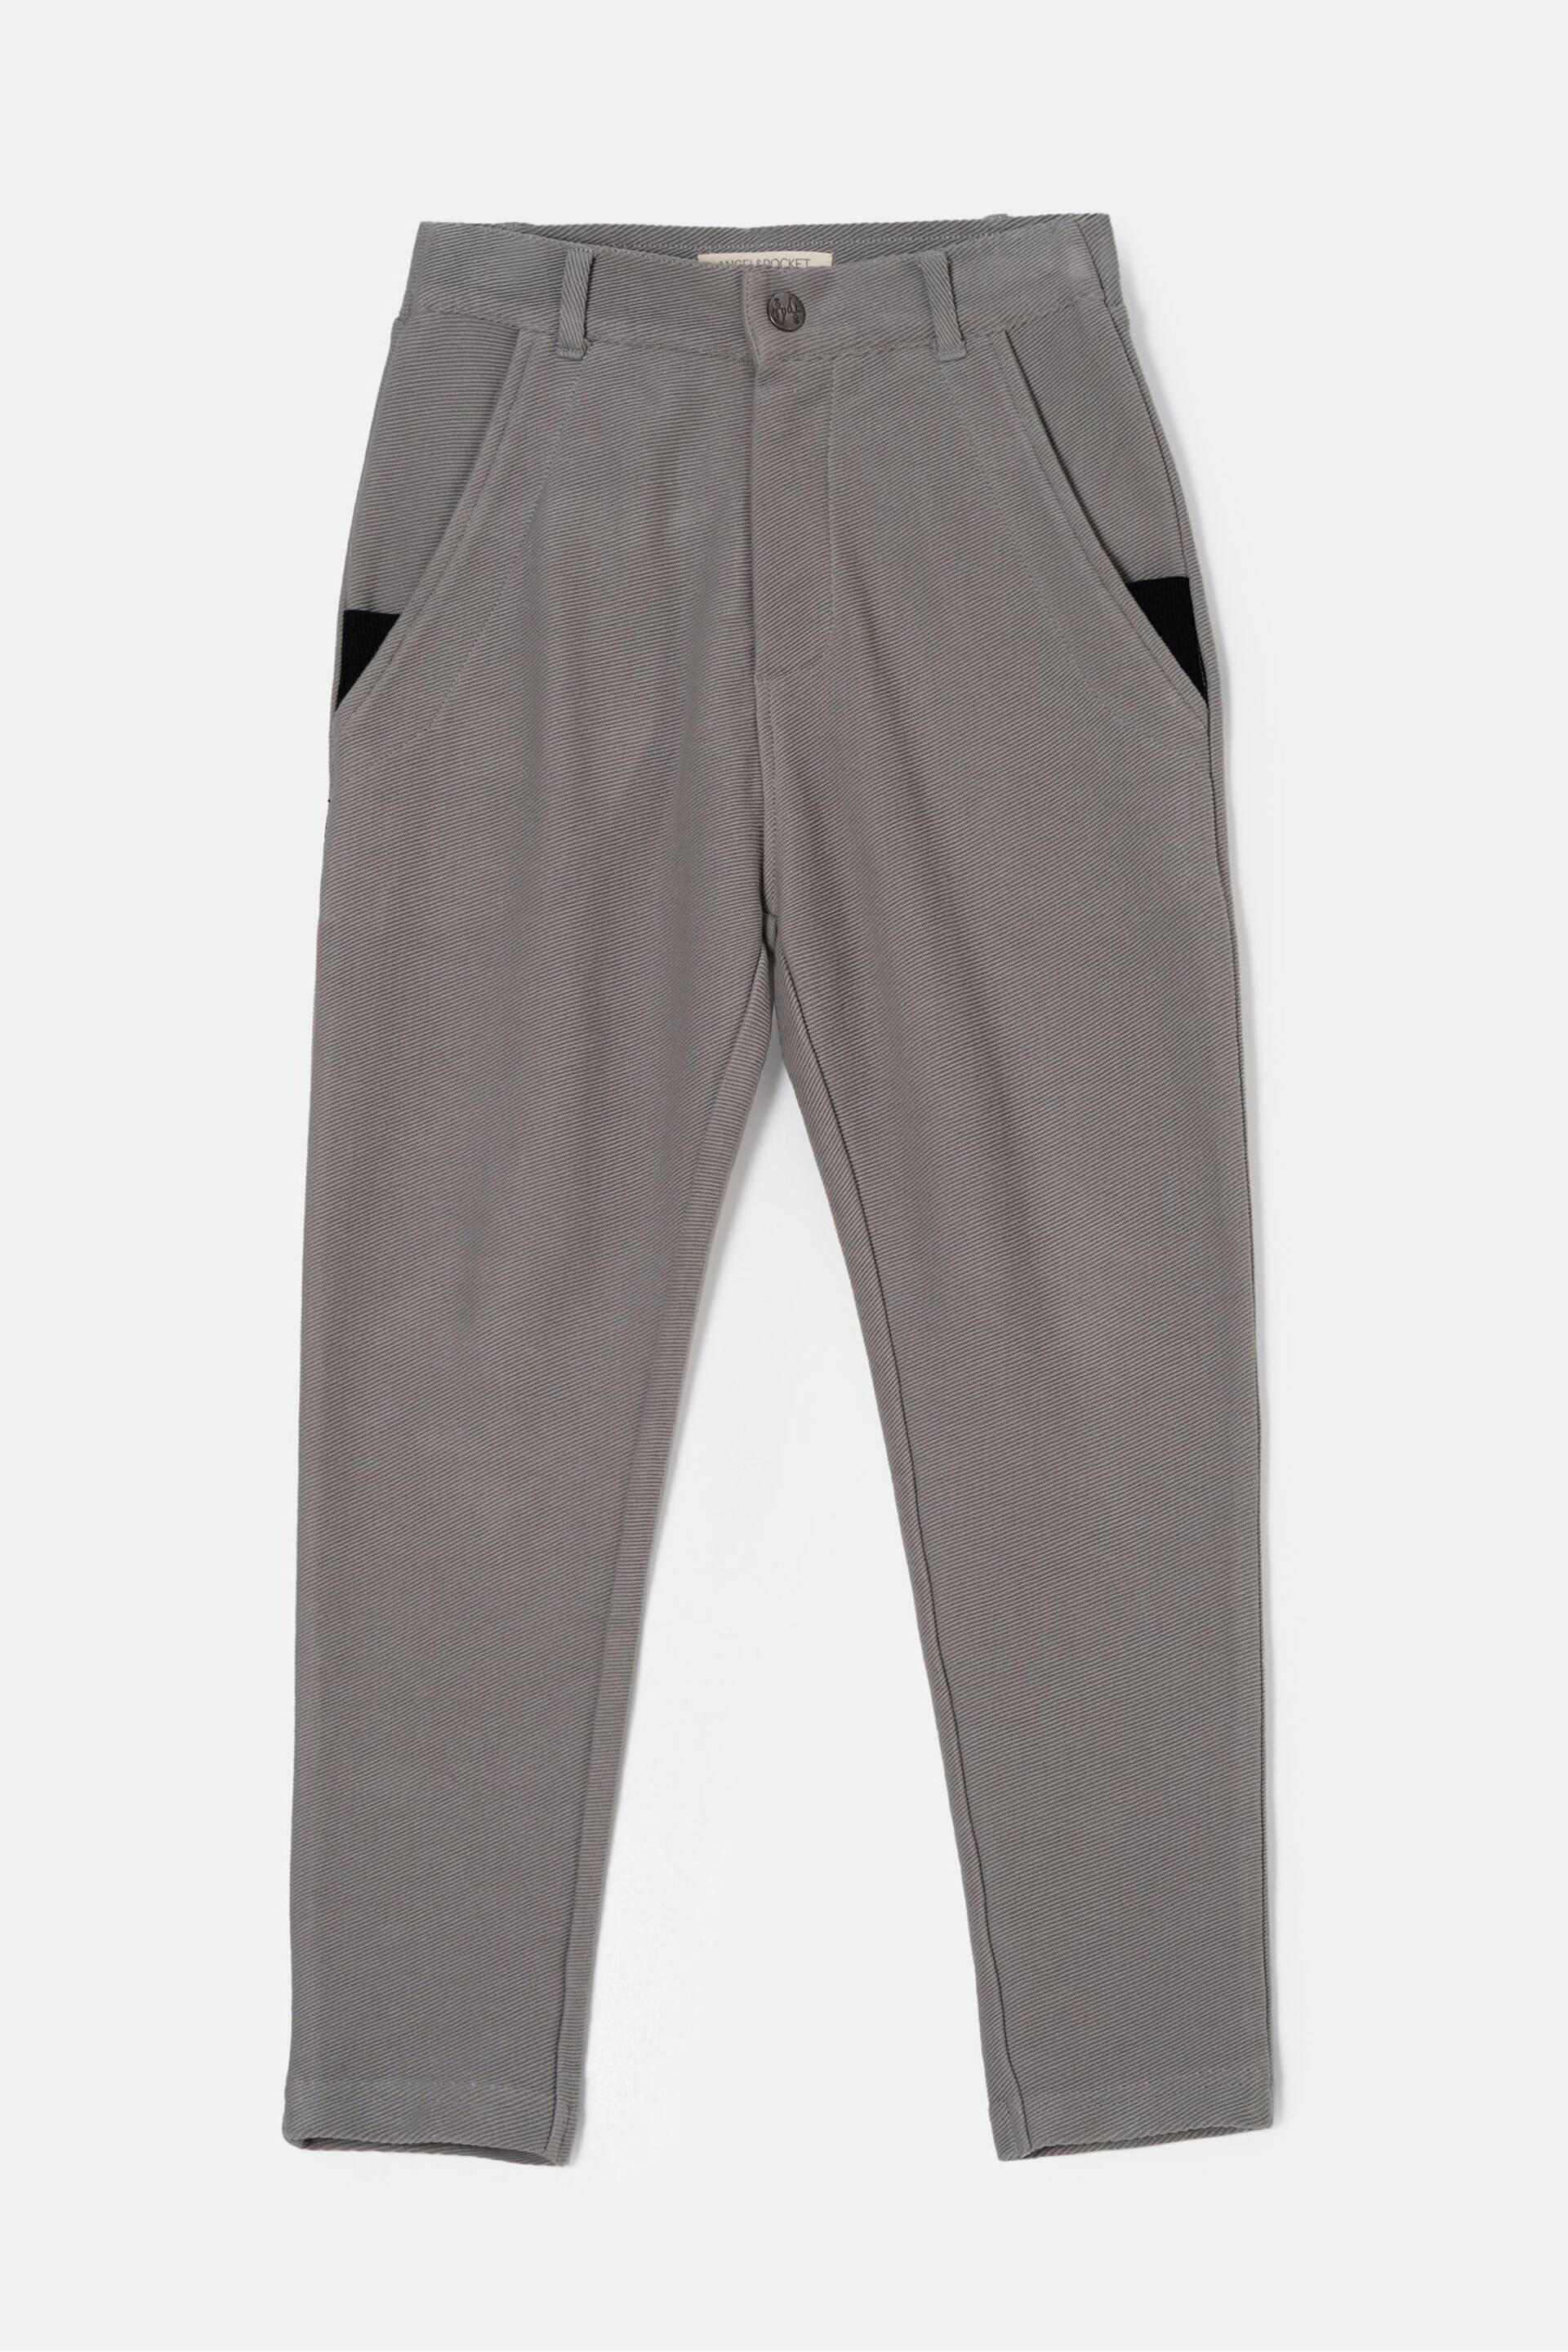 Angel & Rocket Grey Benjamin Smart Jersey Trousers - Image 3 of 5